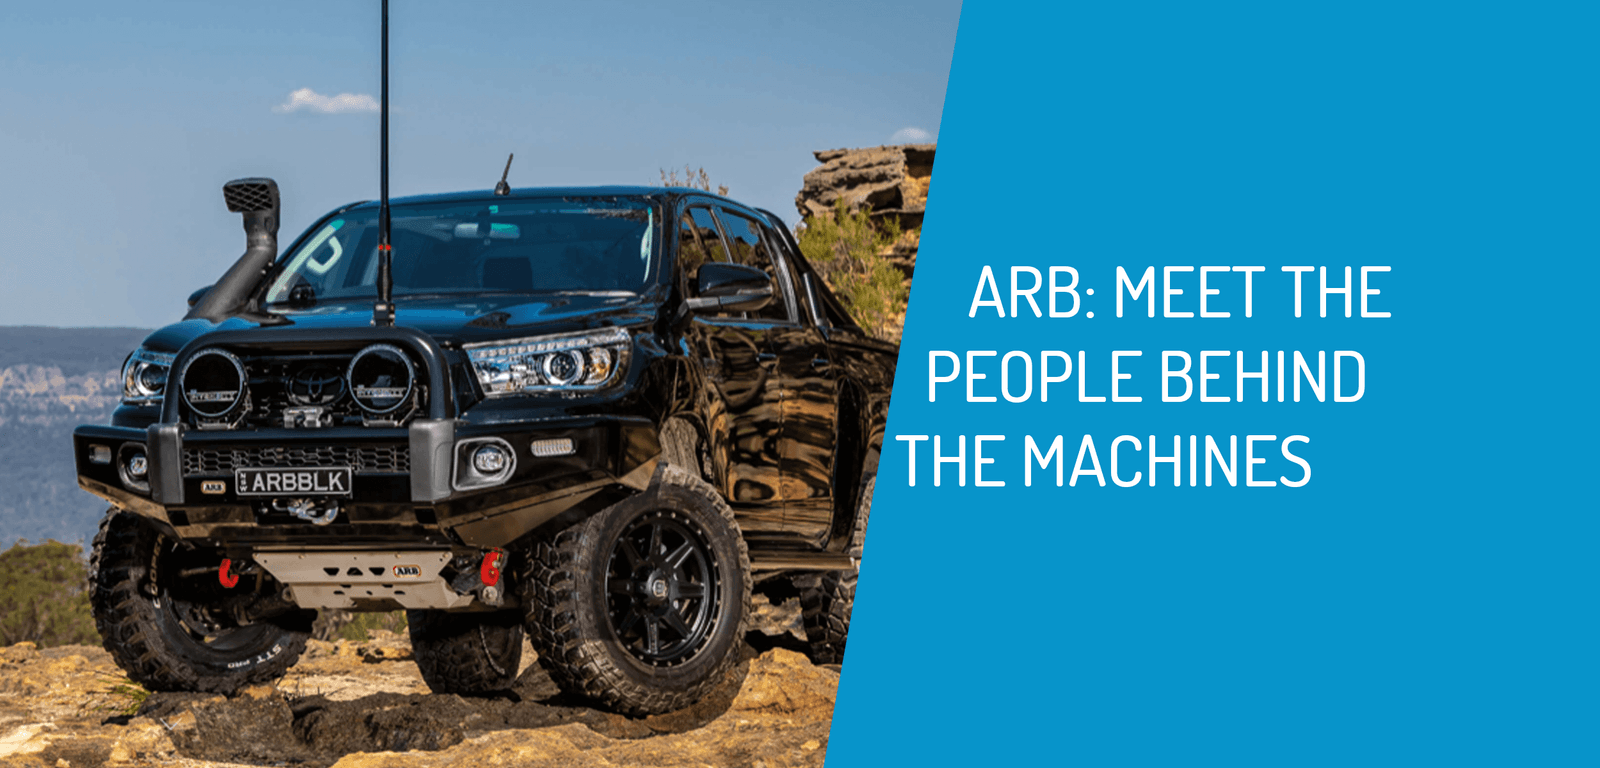 ARB: Meet the People Behind the Machines